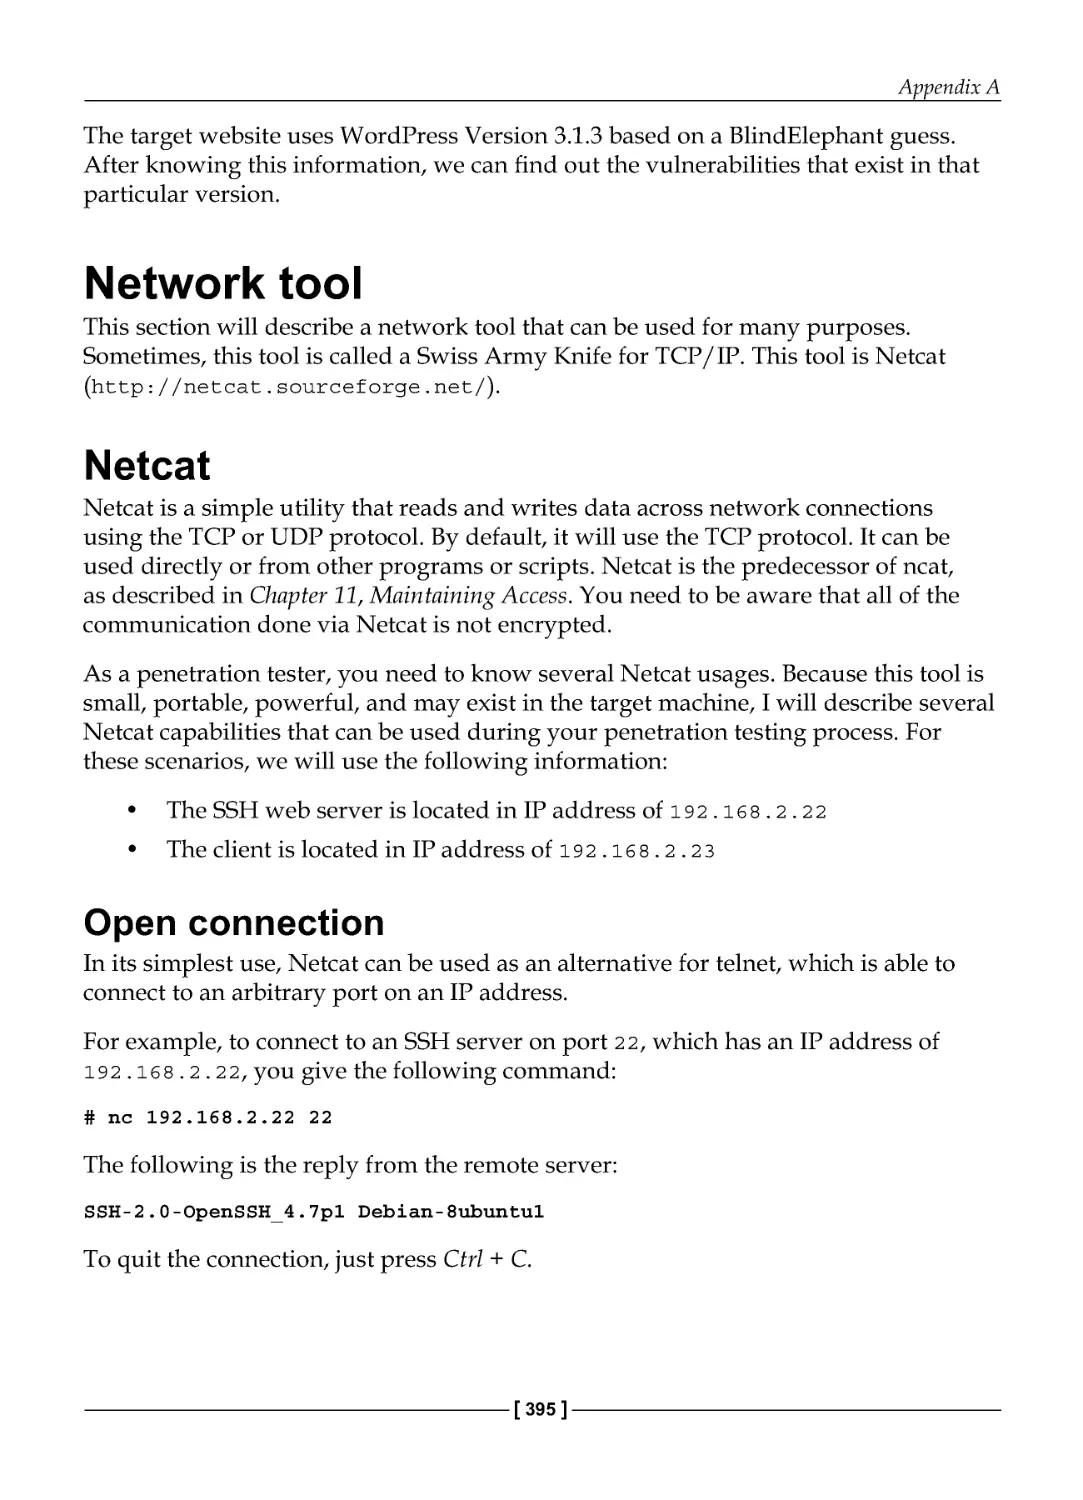 Network tool